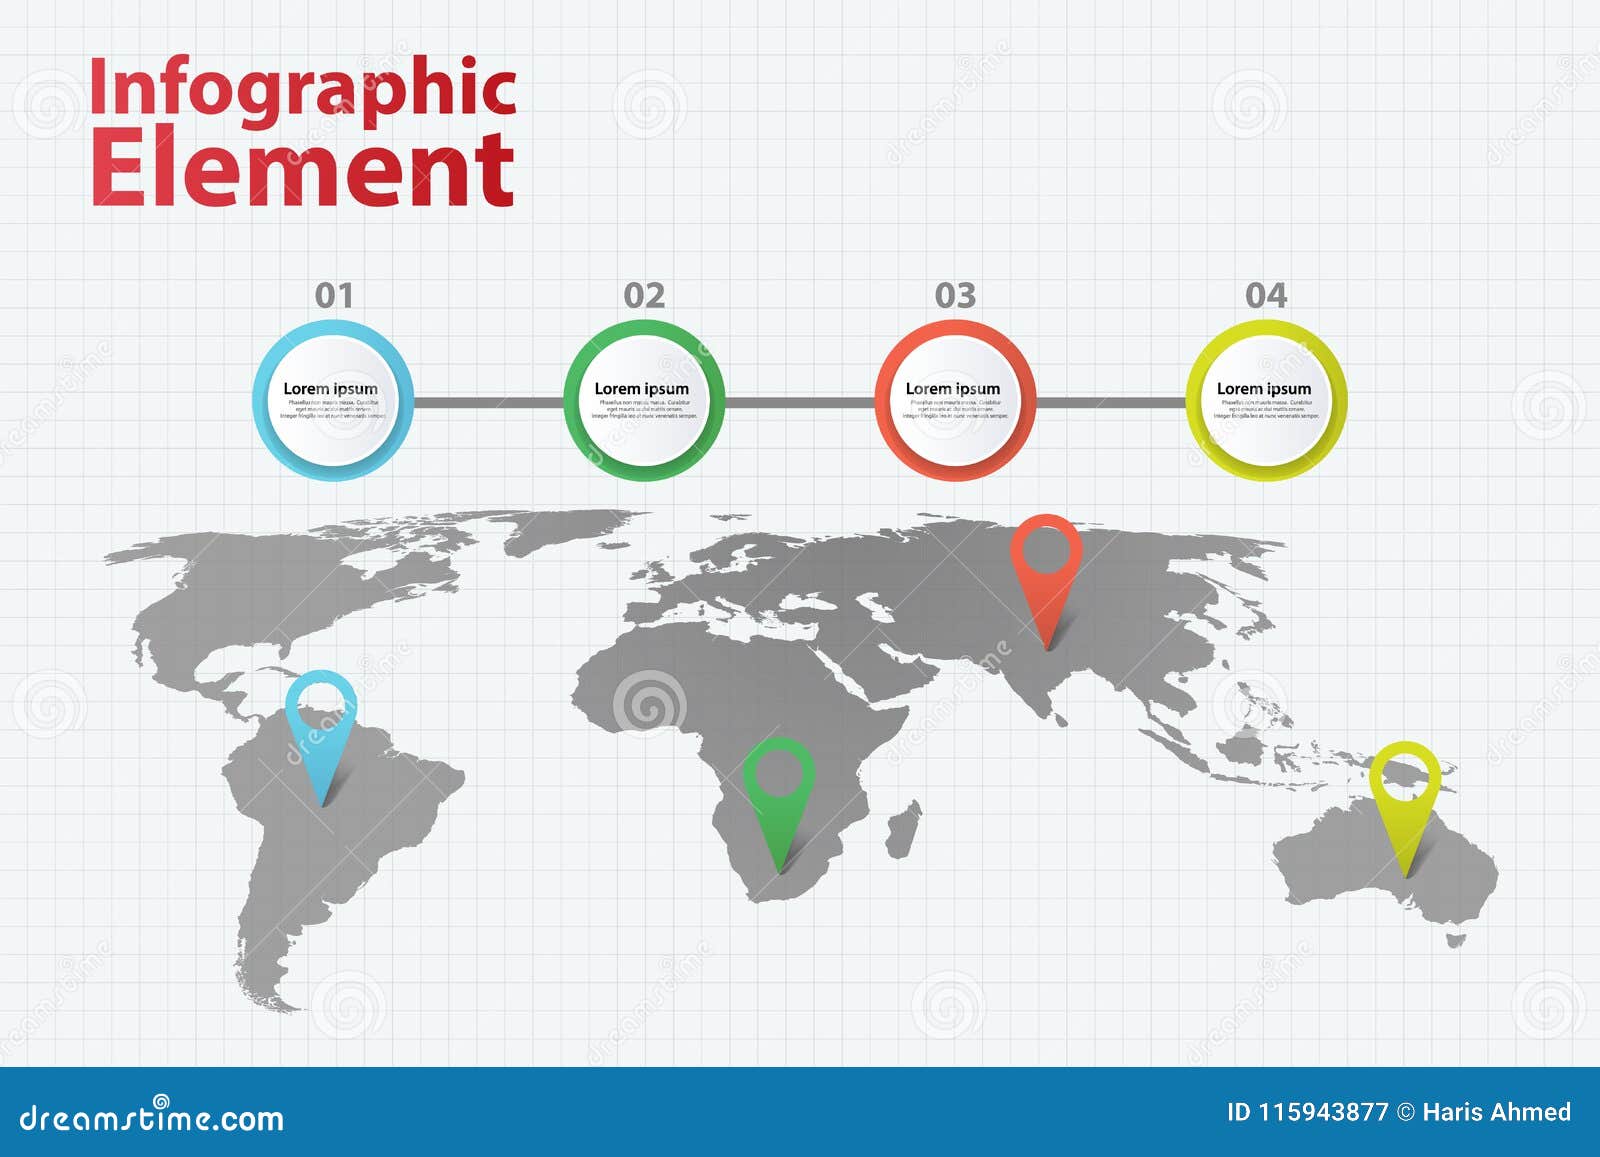 Element world. Infographic 4 elements. World Map with infographic elements.